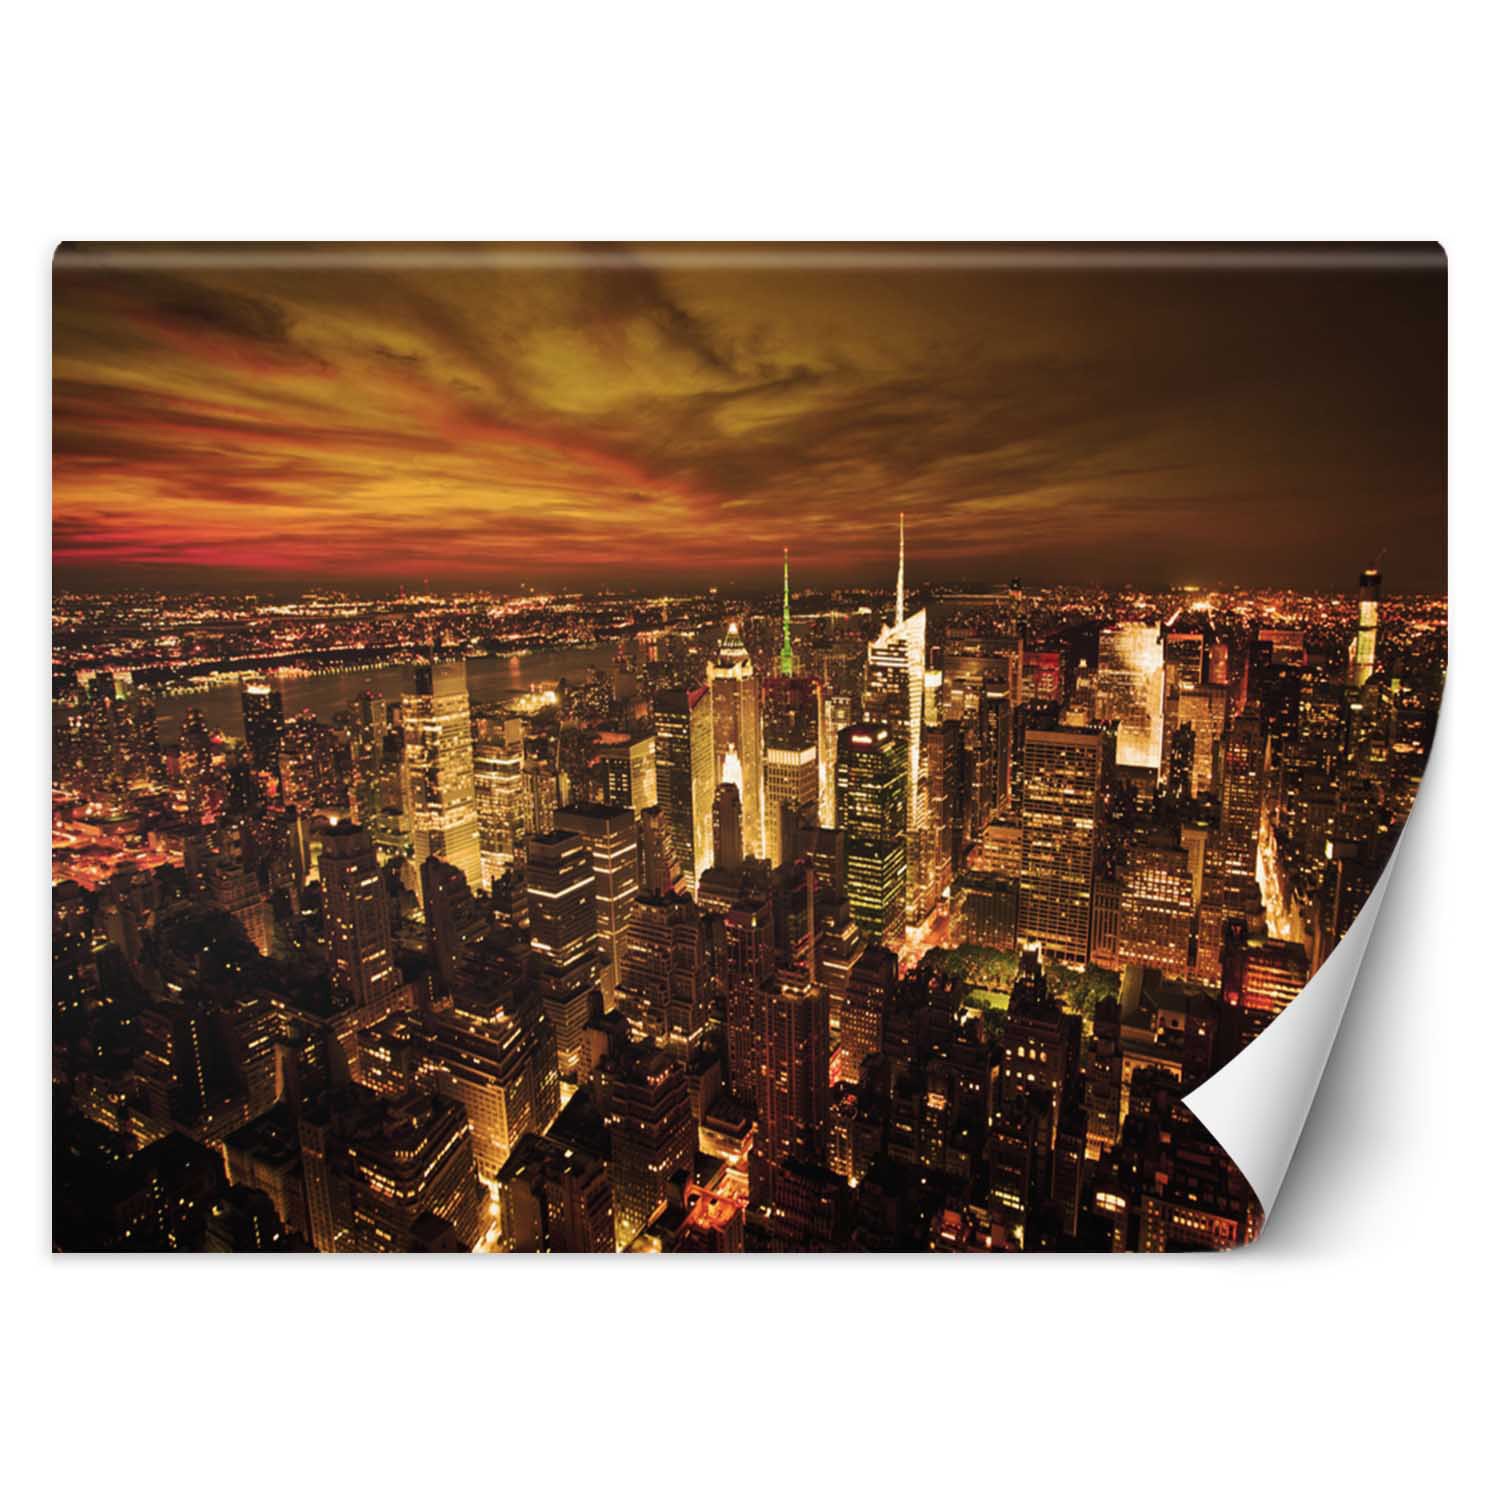 Trend24 – Behang – Midnight Manhattan – Behangpapier – Fotobehang – Behang Woonkamer – 450x315x2 cm – Incl. behanglijm